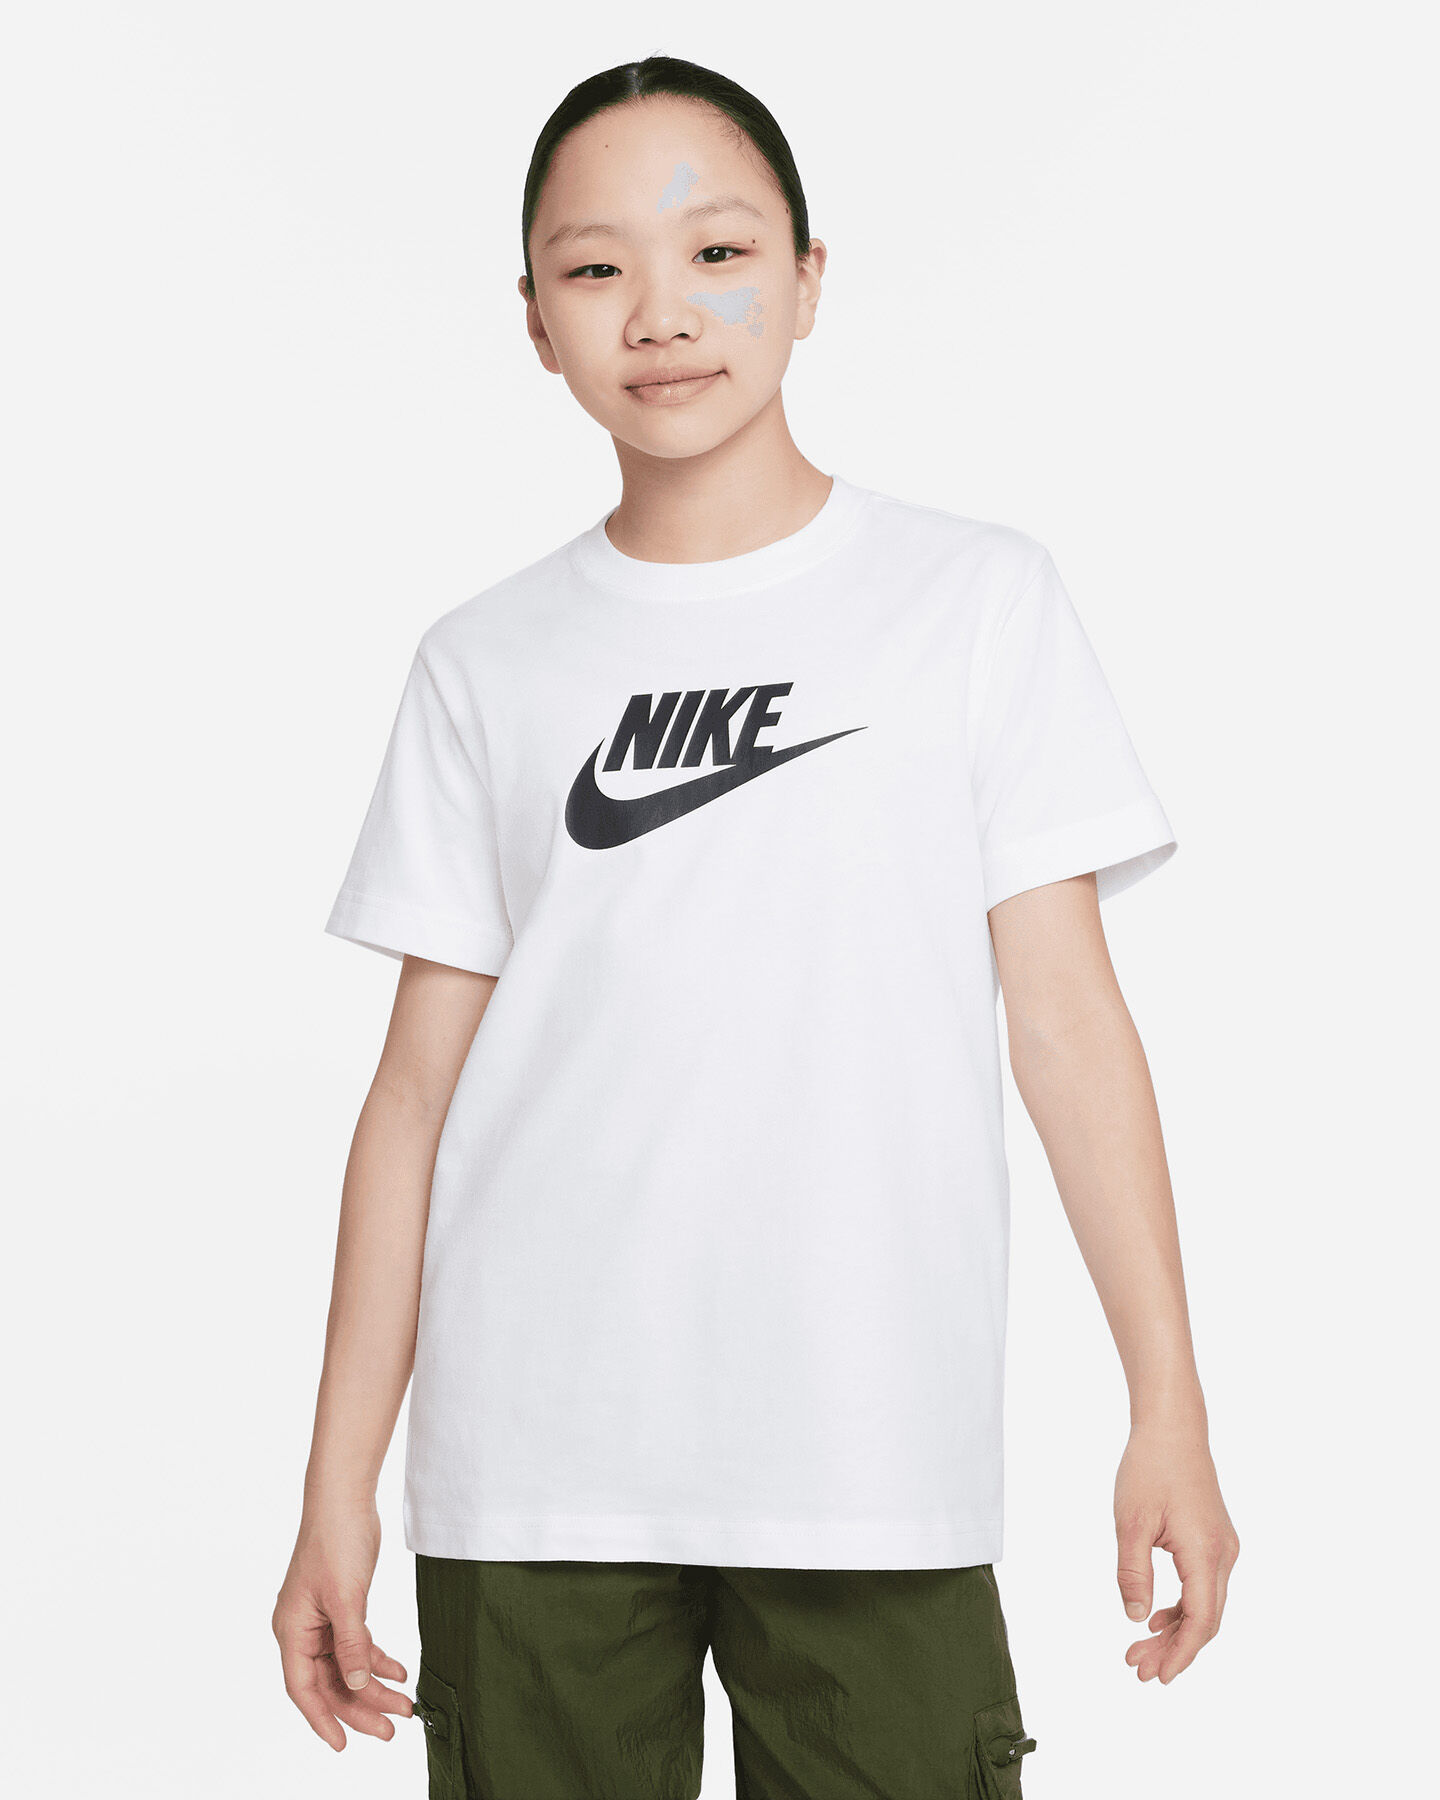  T-Shirt NIKE FUTURA BOYFRRIEND JR S5562664|100|S scatto 0